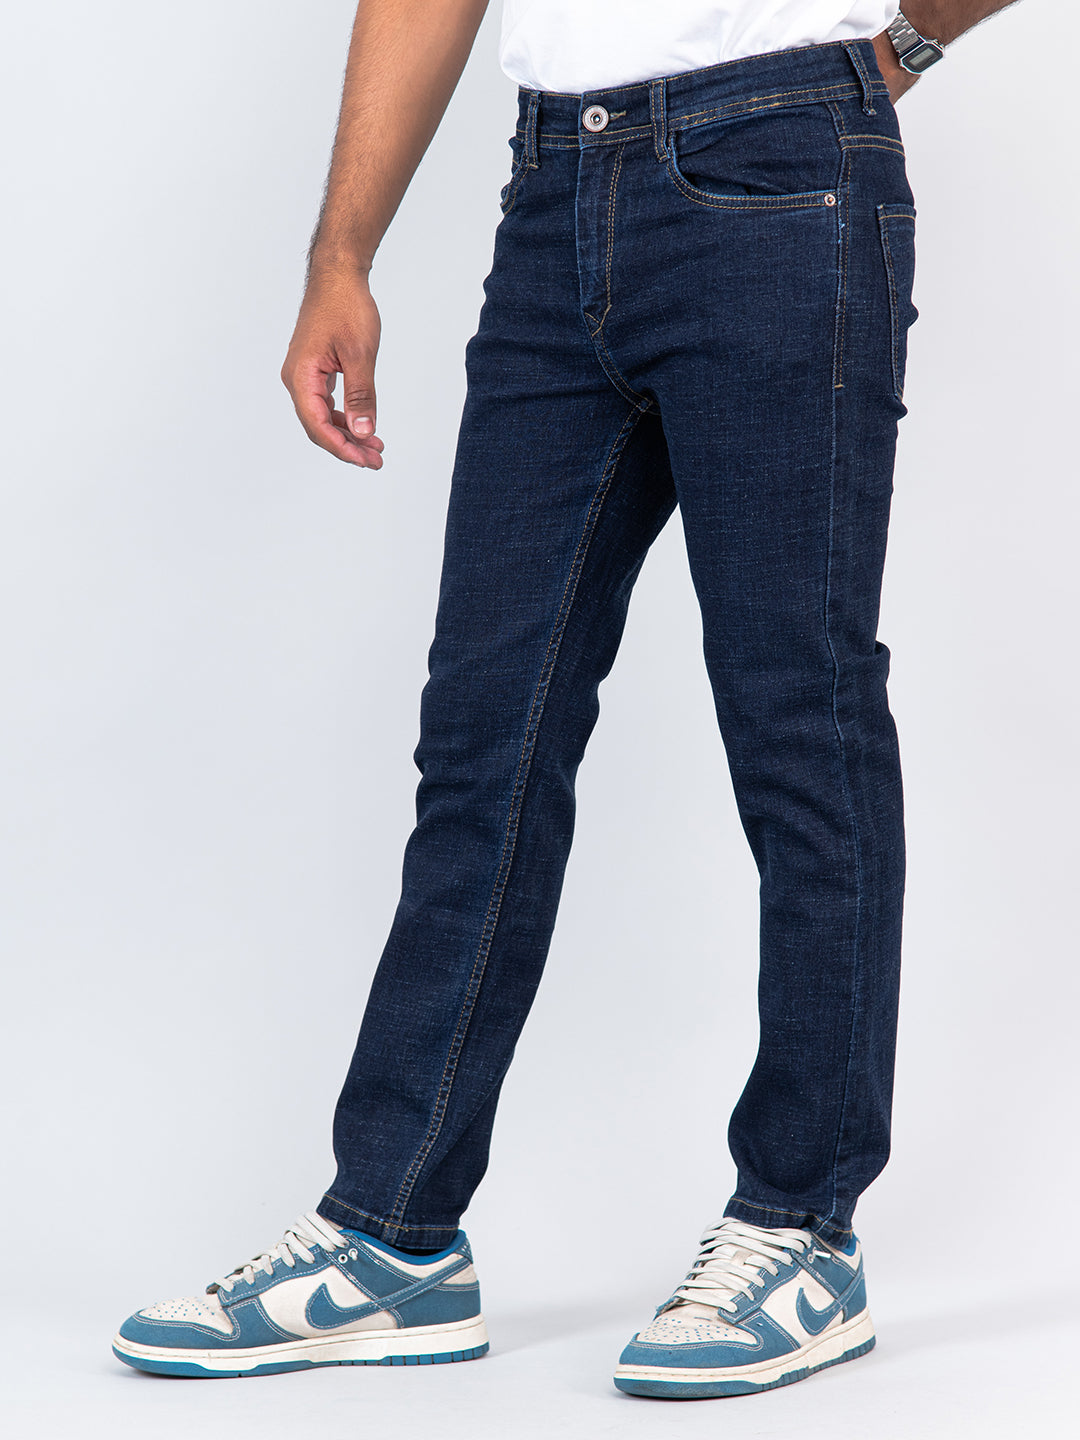 blue denim jeans mens